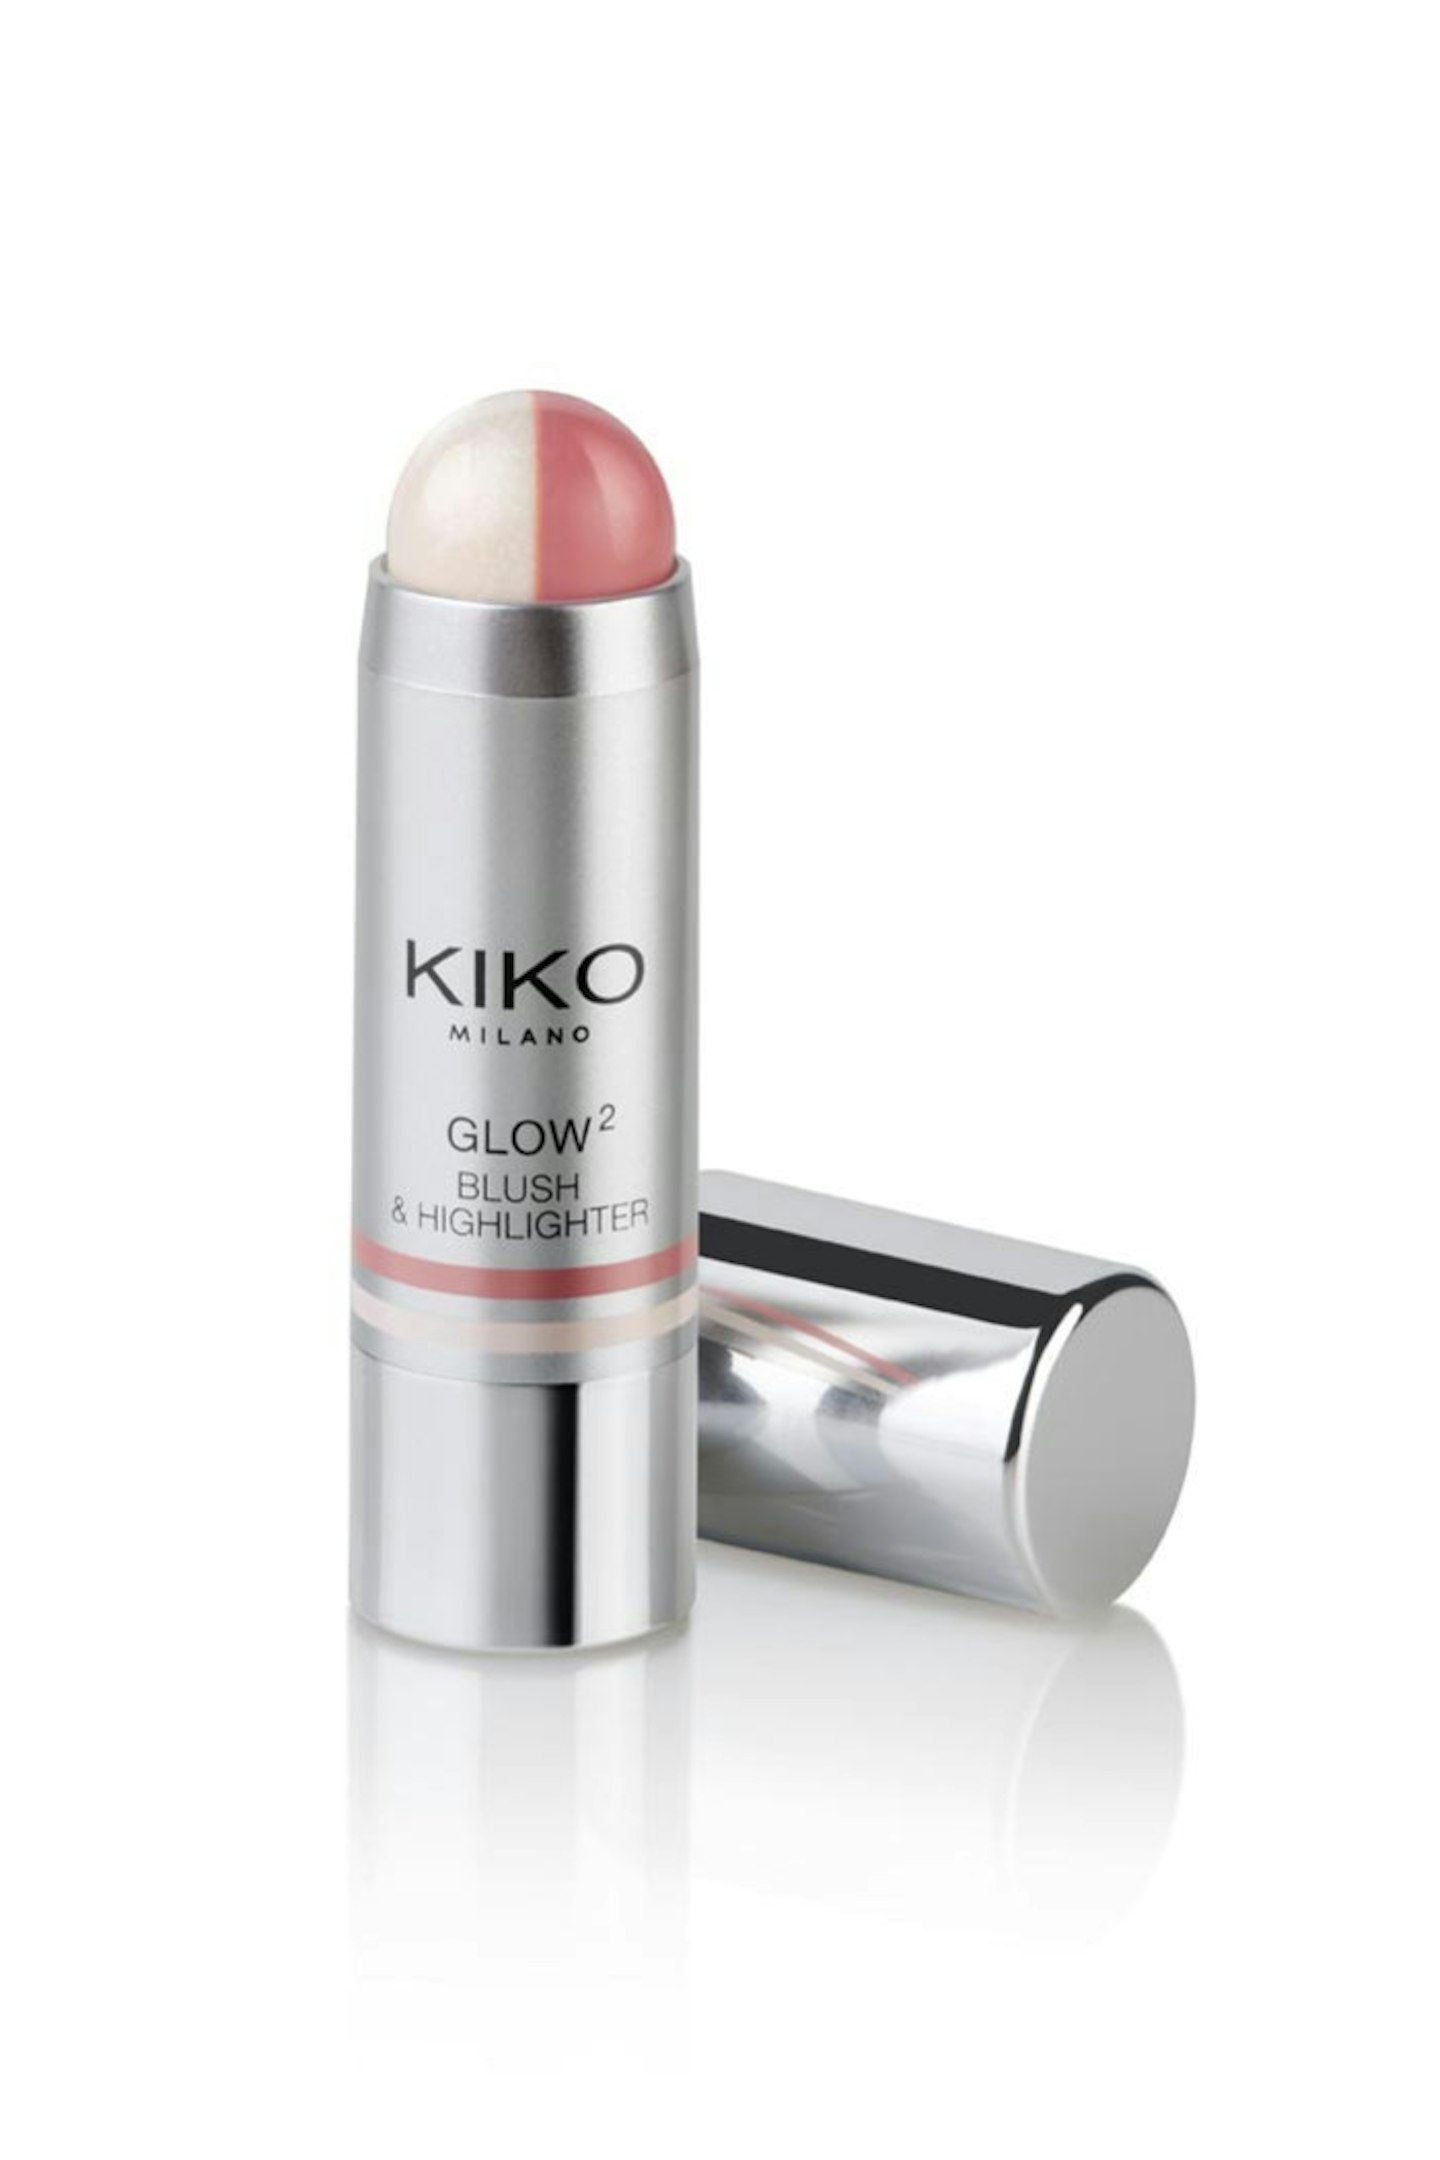 KIKO Glow2 Blush + Highlighter, £8.80, KIKO